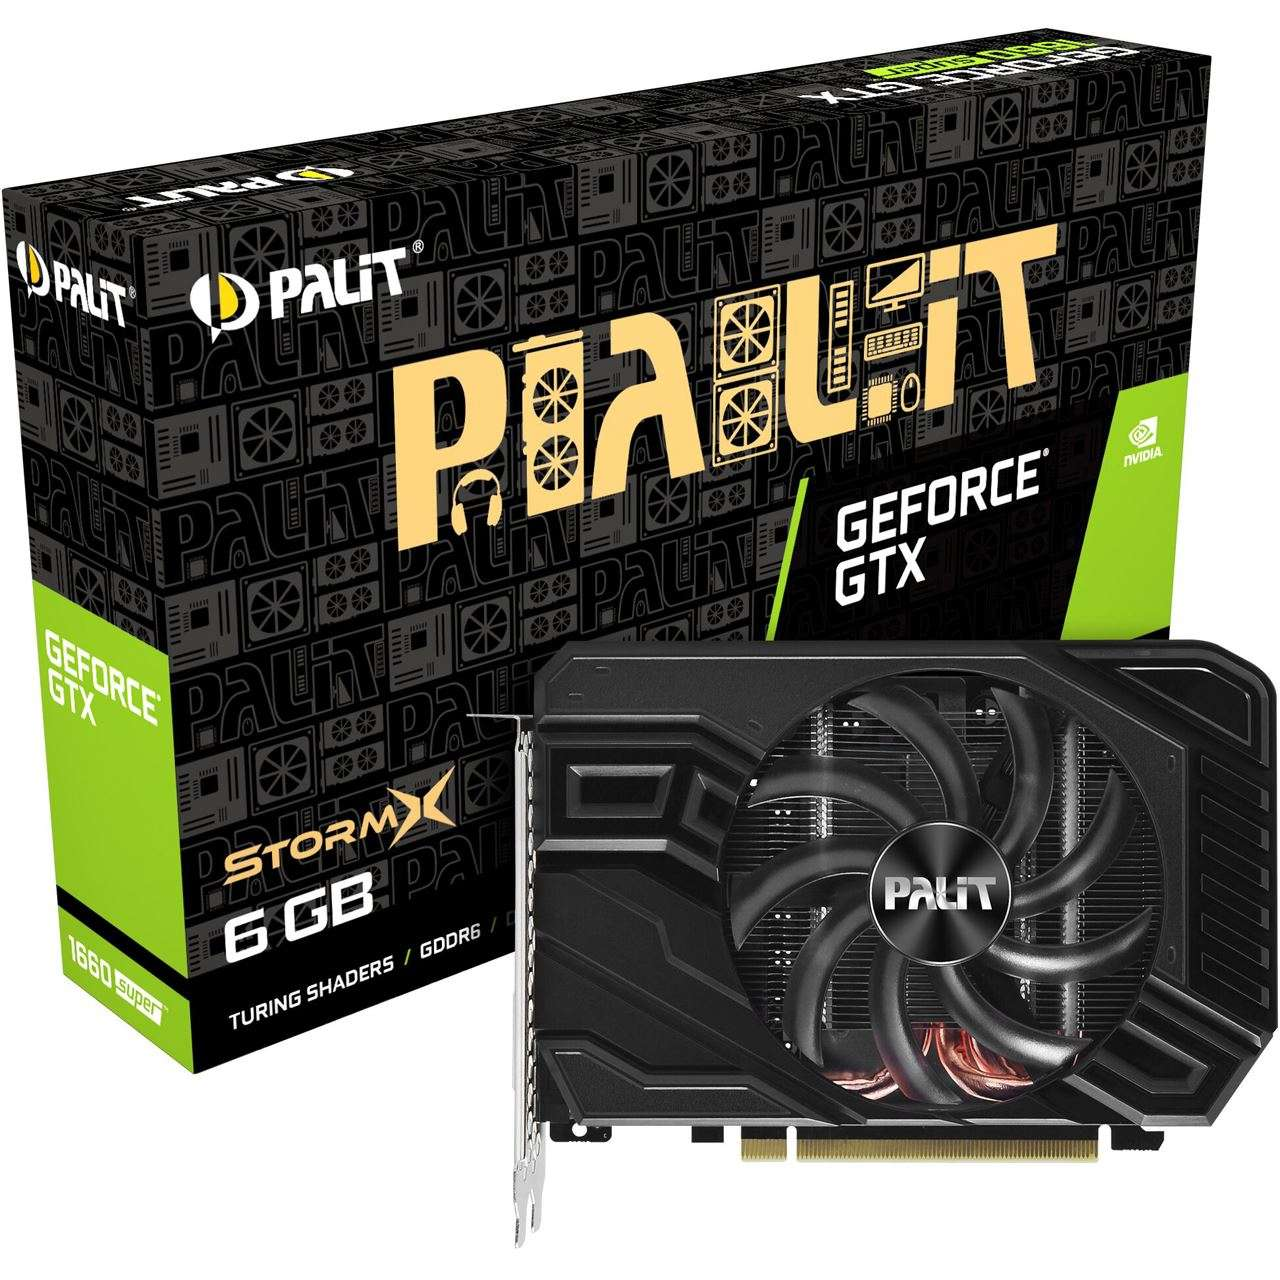 PALIT GTX 1660 card) Super Graphics StormX (NVIDIA